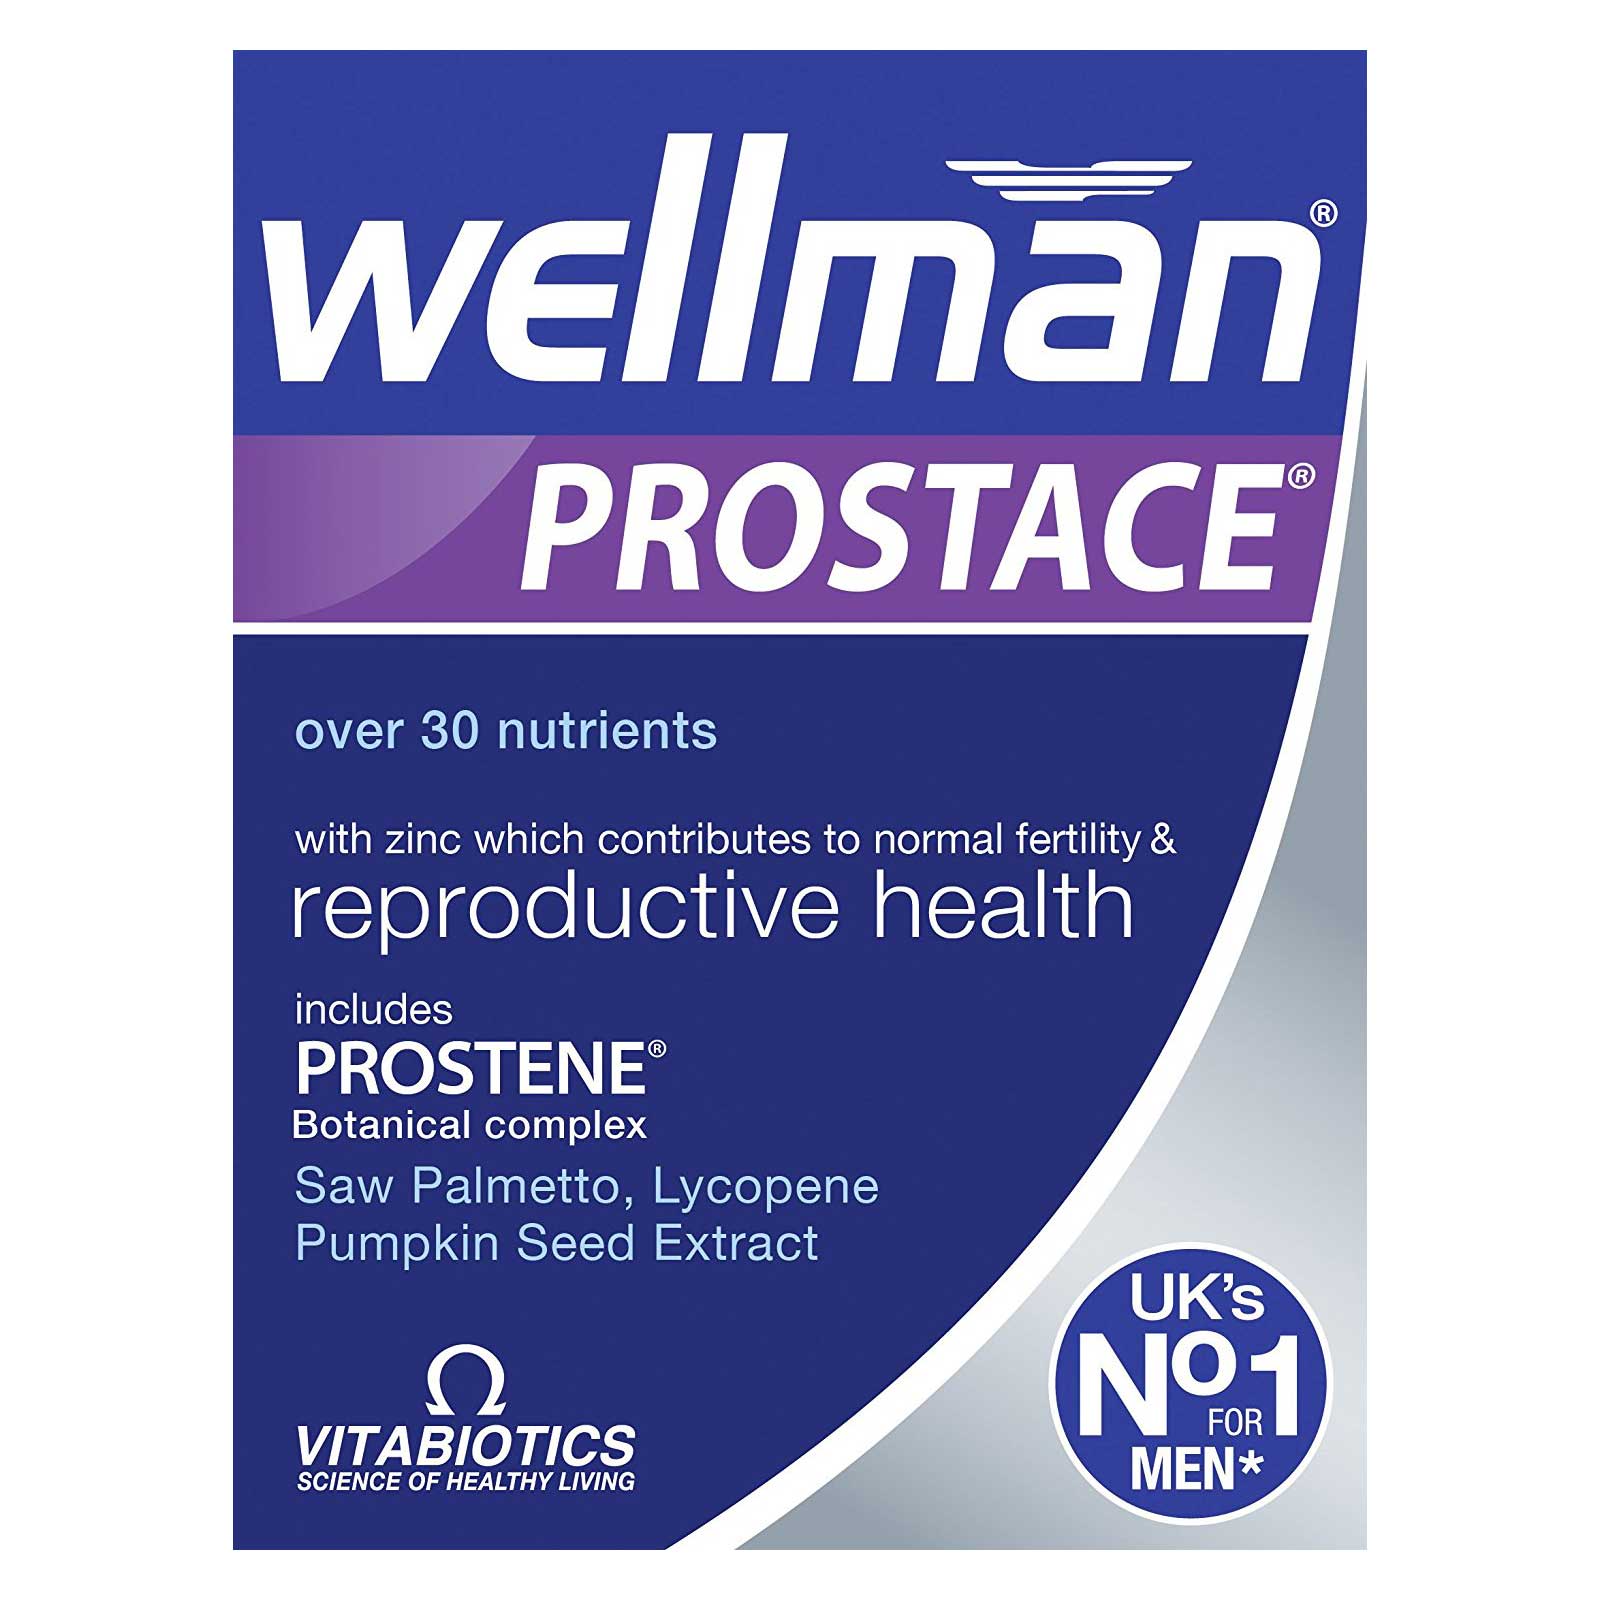 wellman prostace